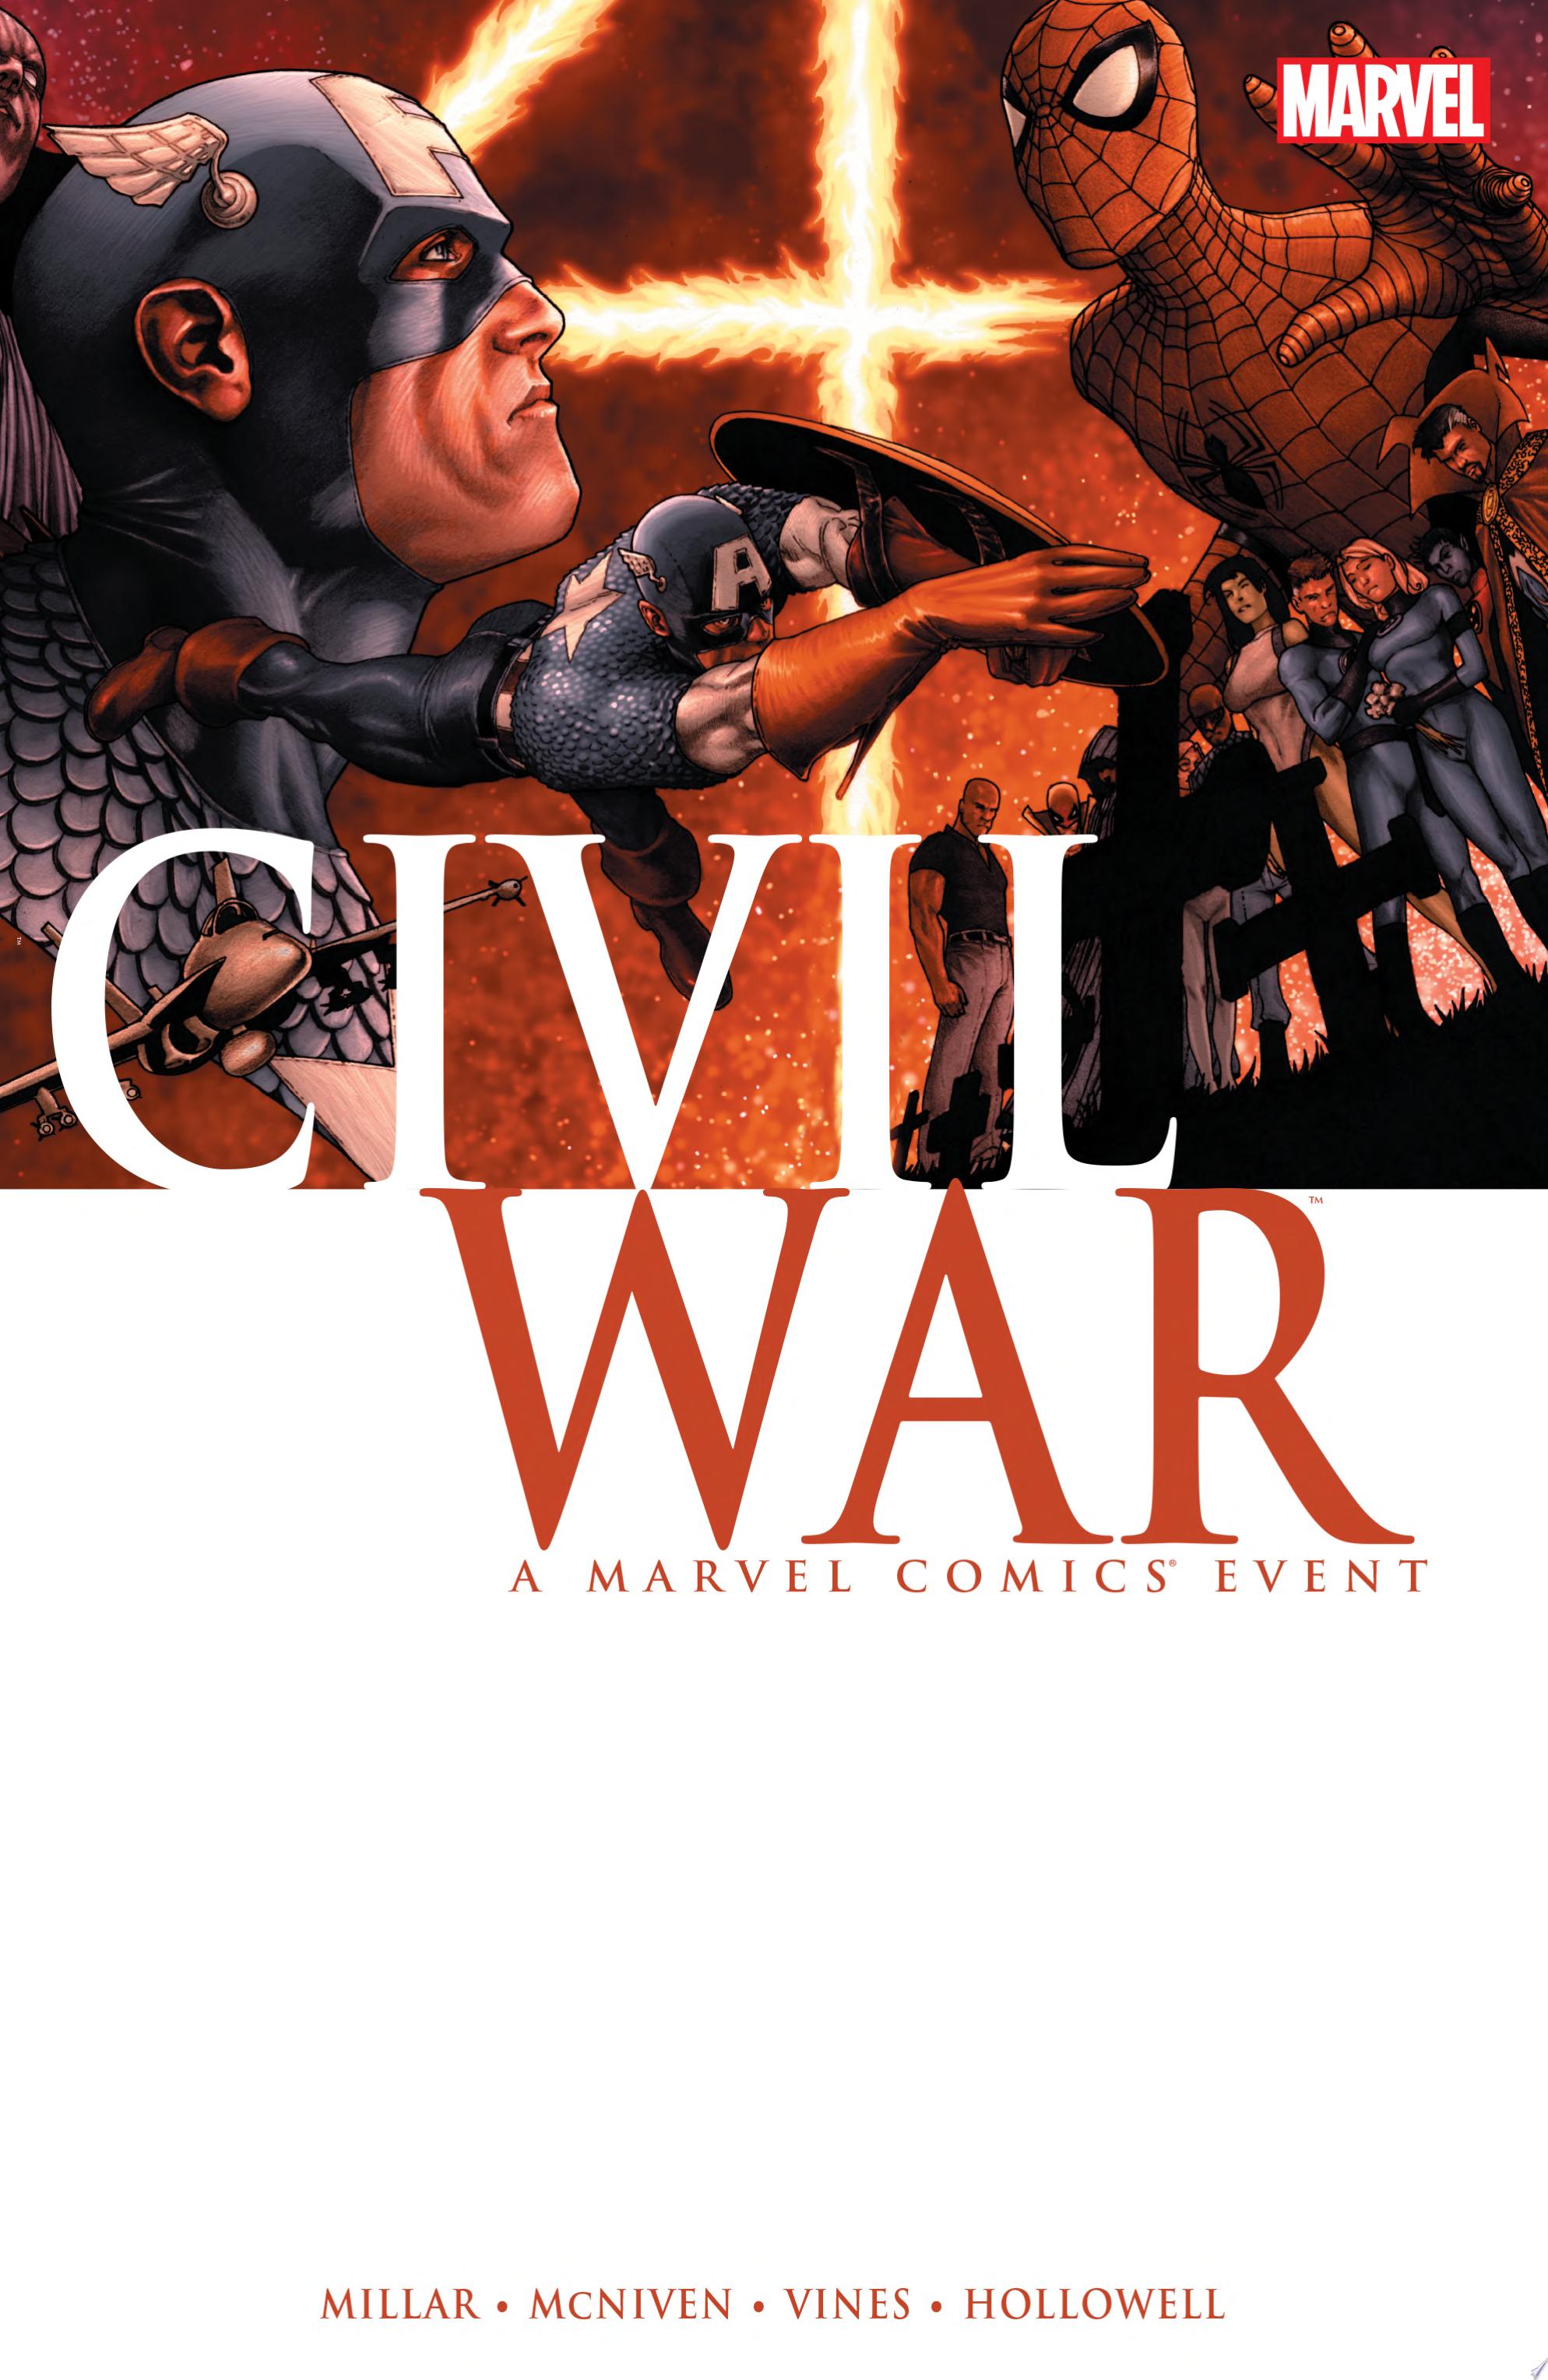 Image for "Civil War"